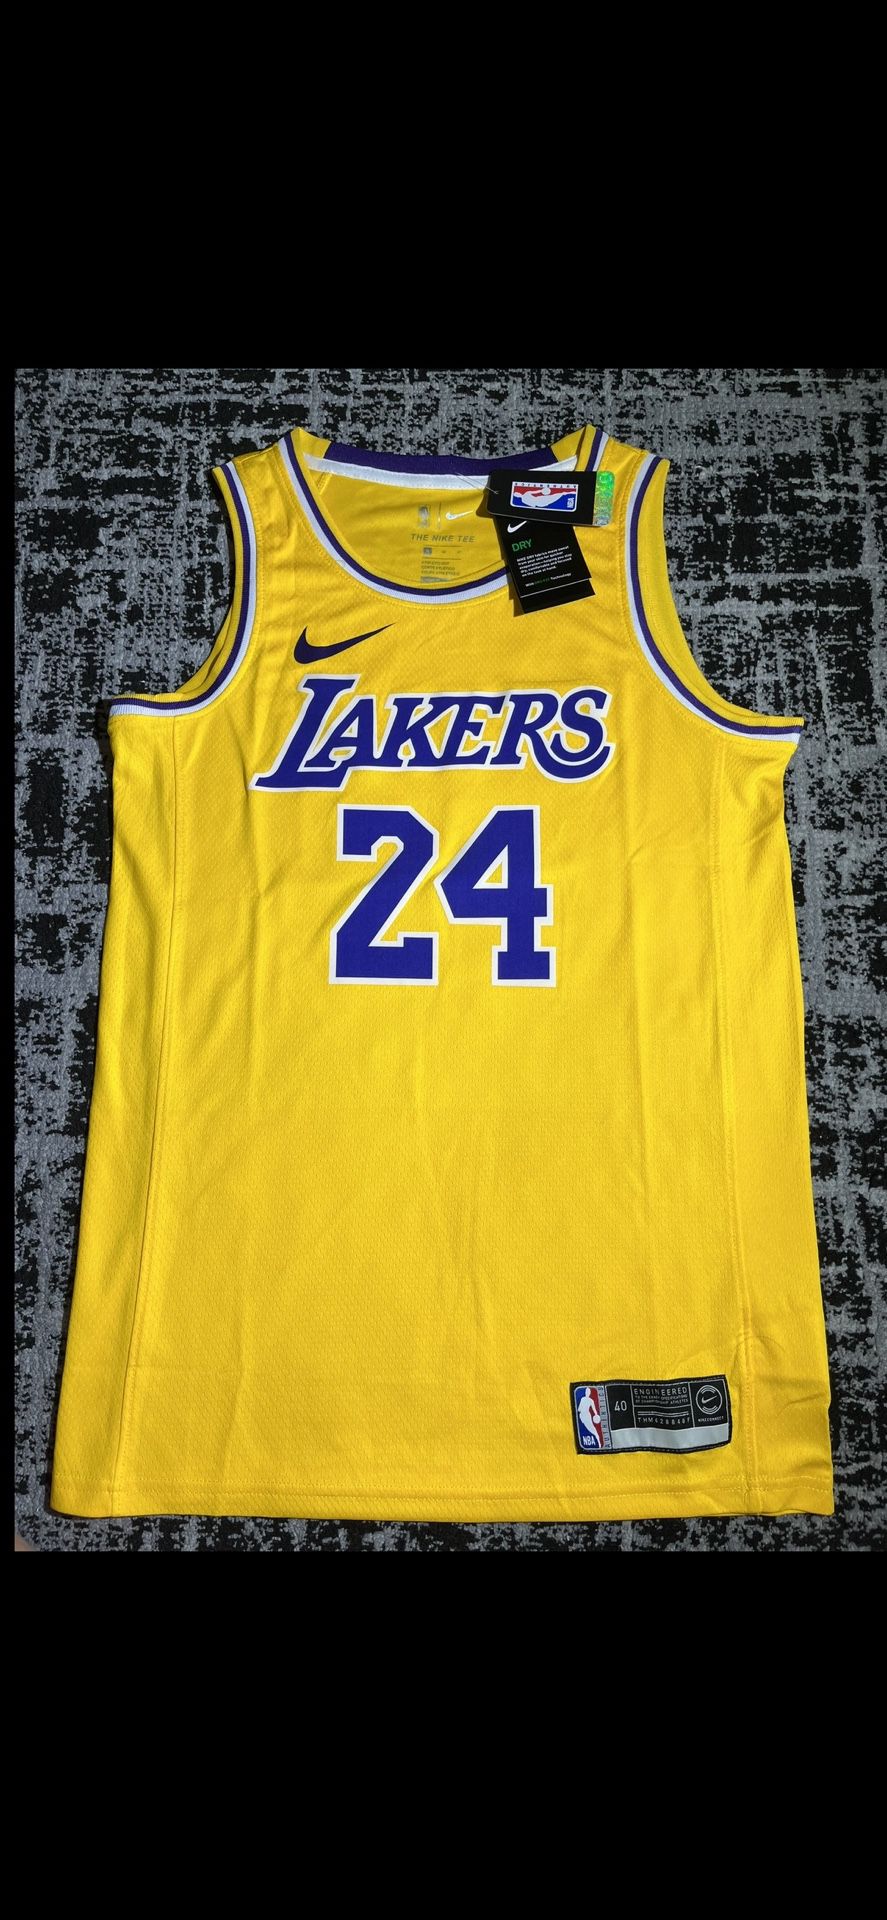 Kobe Bryant Brand New Lakers Jersey 